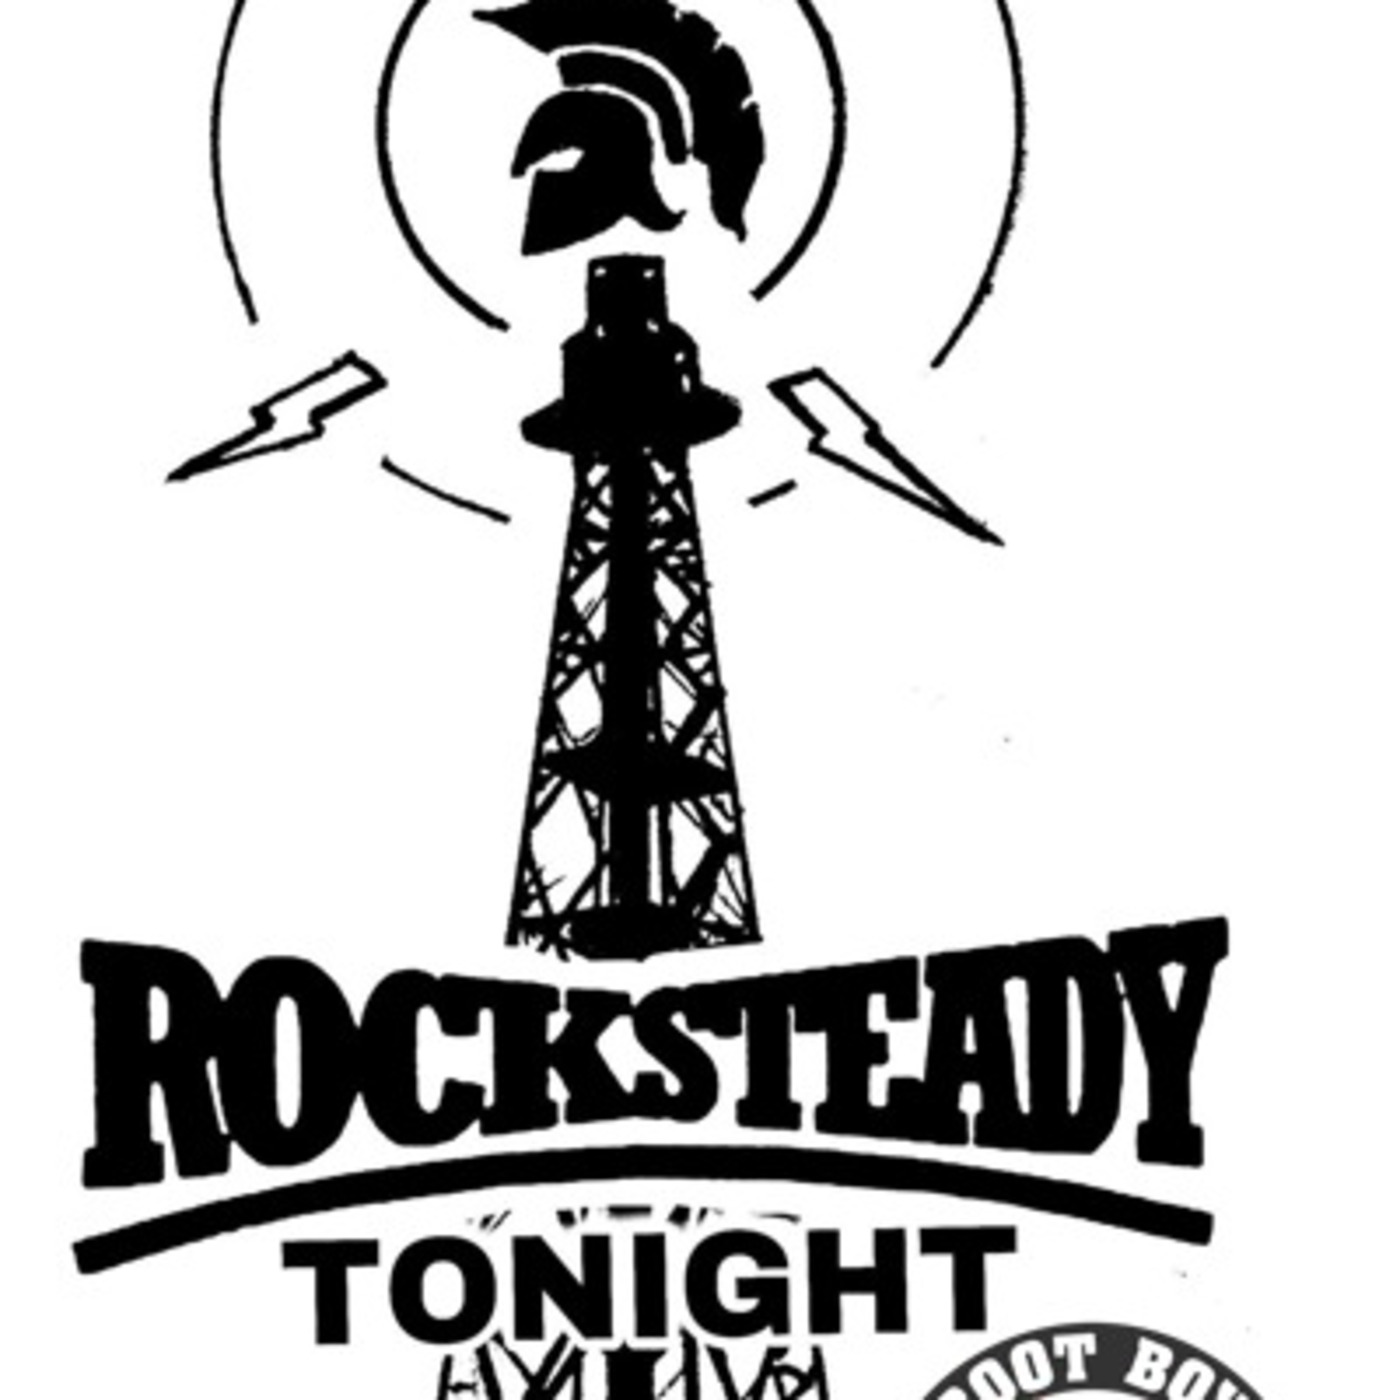 Episode 2763: Rocksteady Tonight With Phil Duckworth Show 81 30th Oct 2022 On www.bootboyradio.net